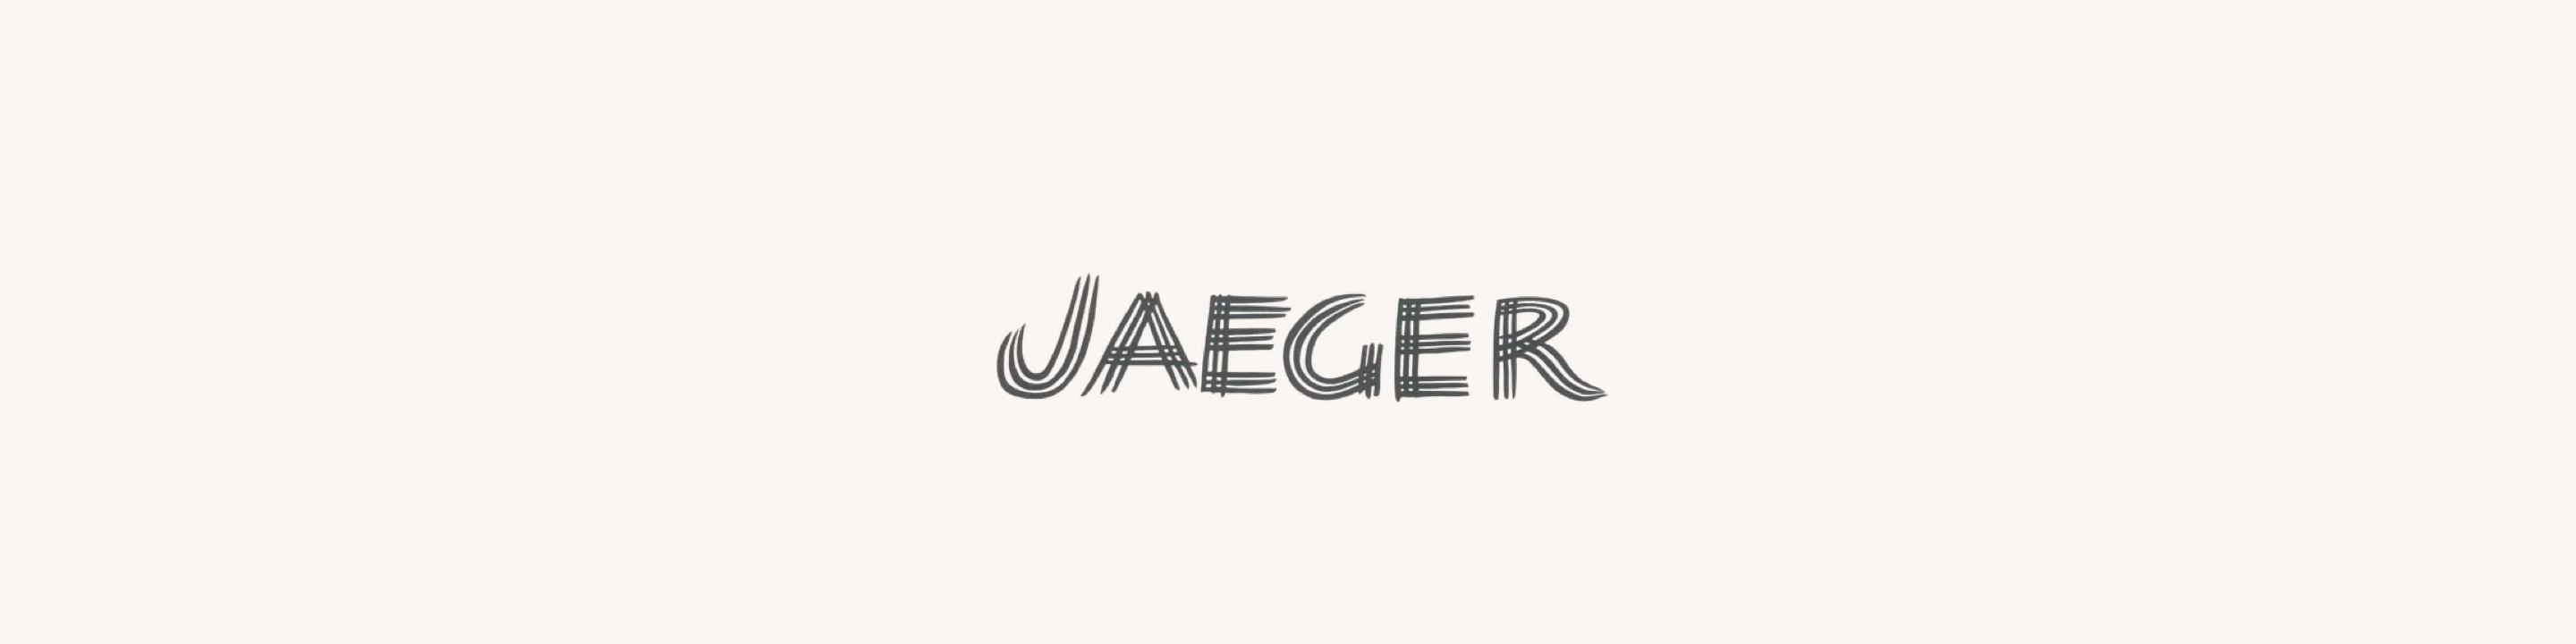 Jaeger Designer Glasses and Sunglasses | Vision Express